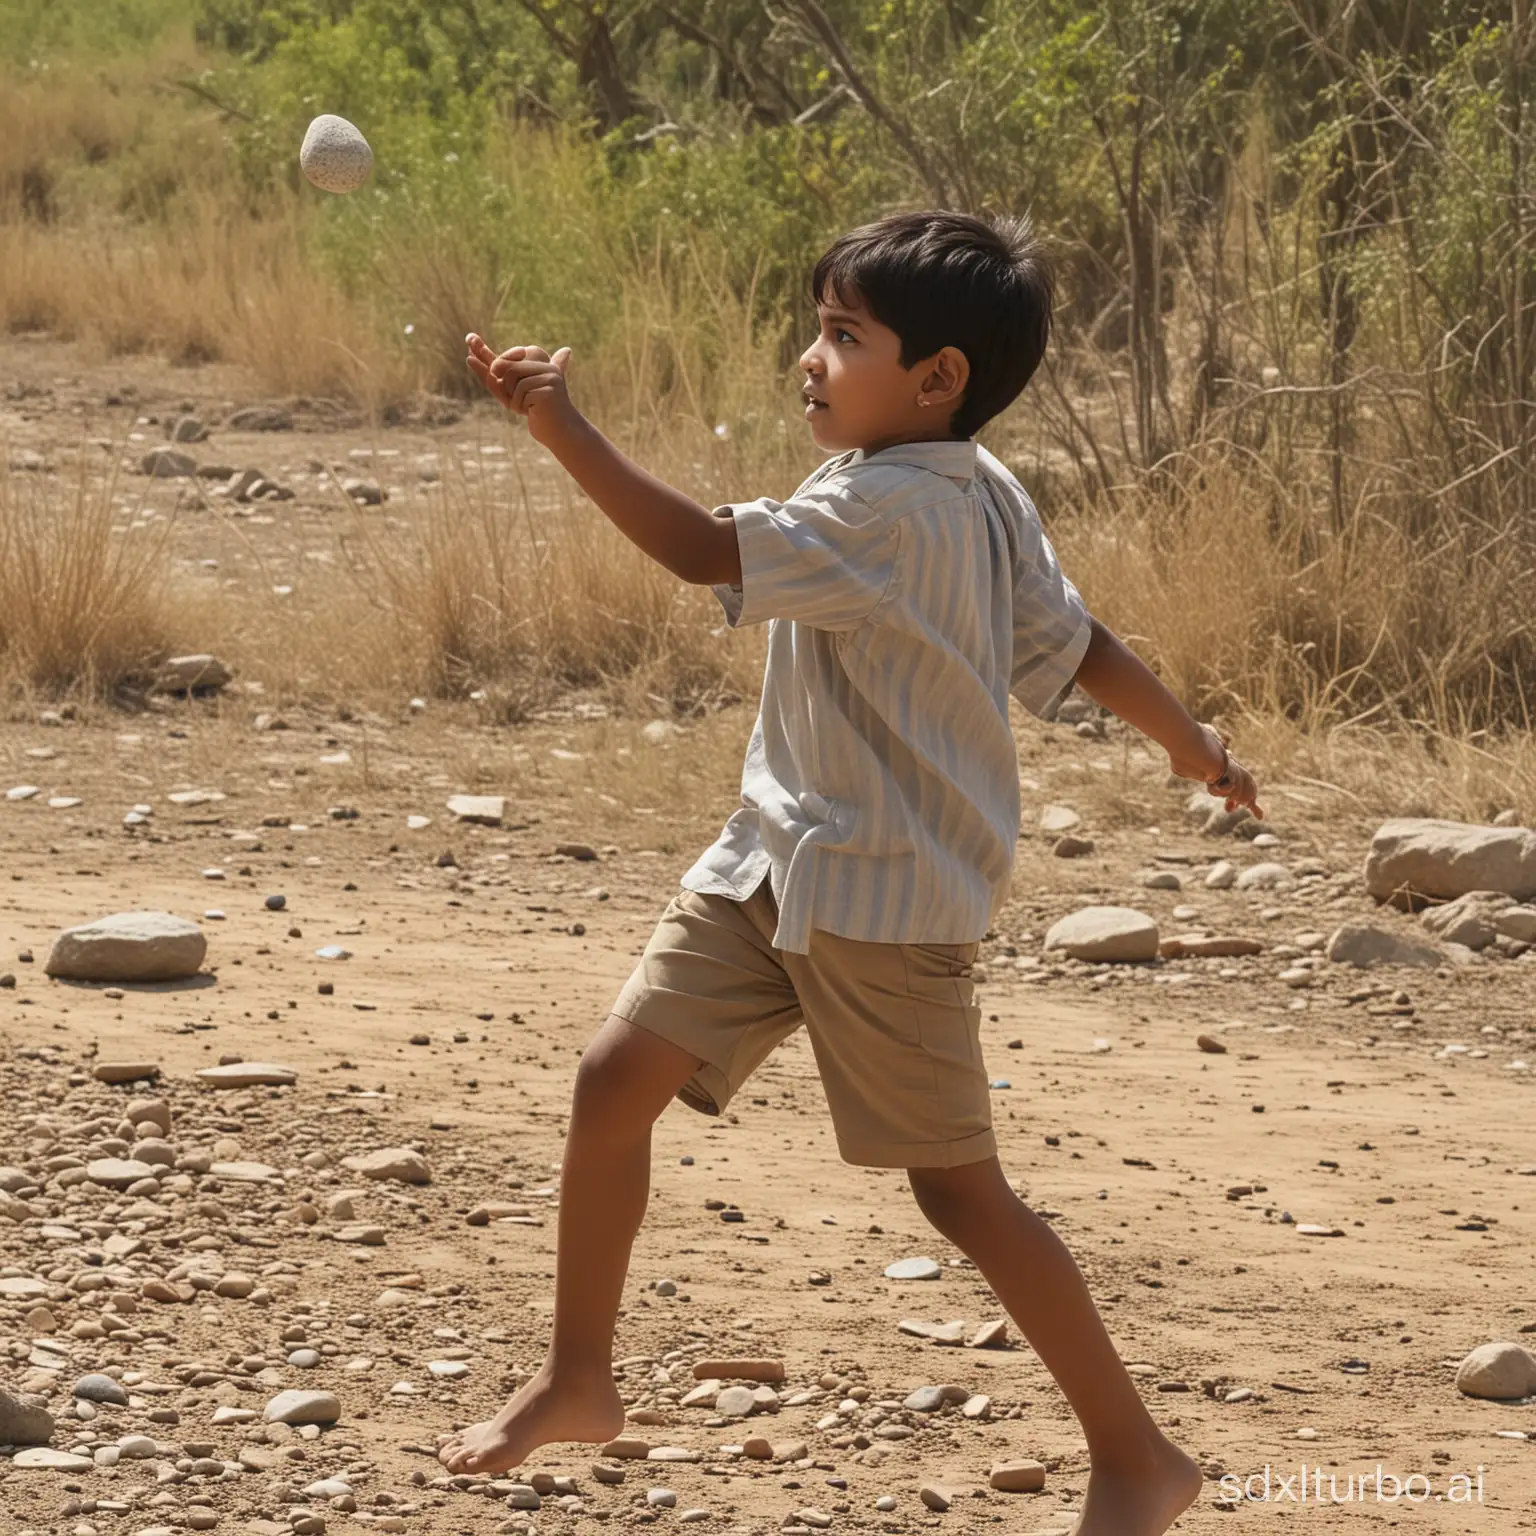 Indian-Boy-Throwing-Stone-in-Riverside-Scene